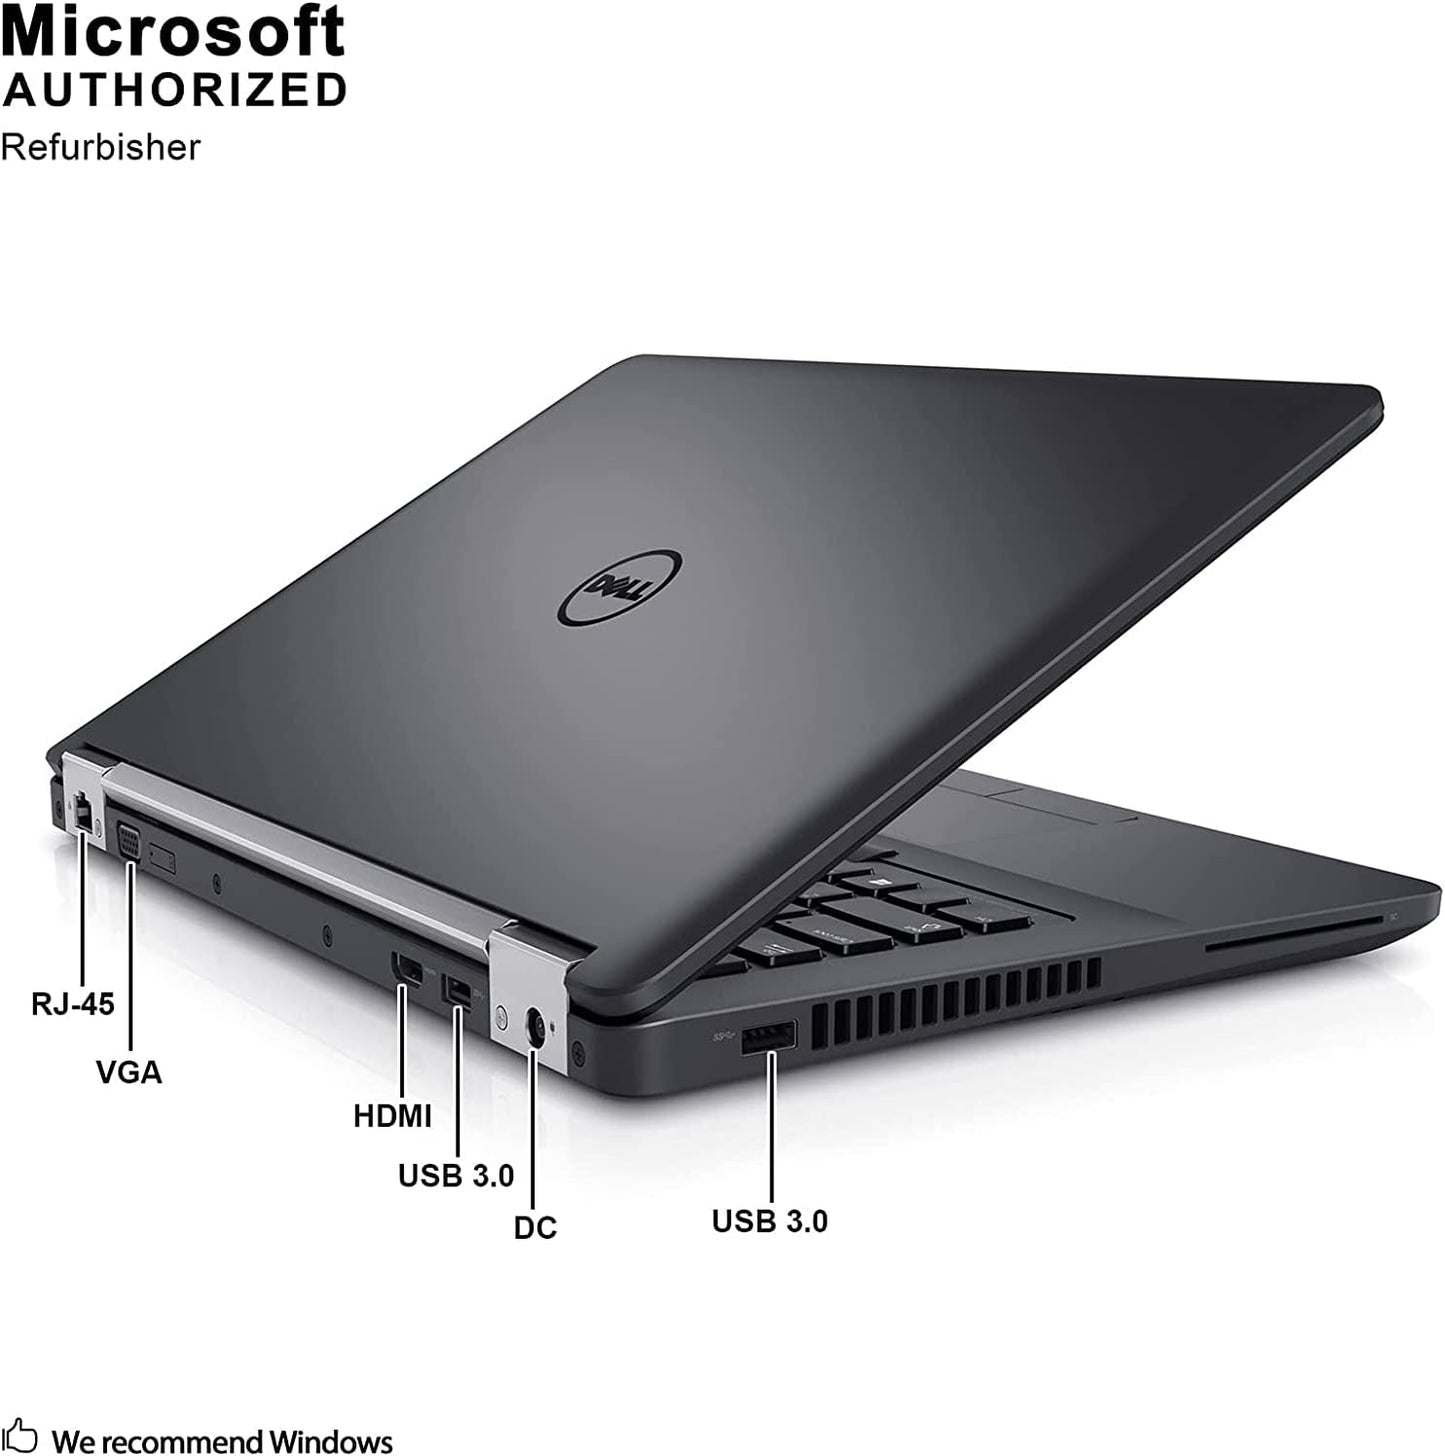 Latitude E5470 HD Business Laptop Notebook PC - Intel Core I7-6600U, 8GB Ram, 256GB SSD, HDMI, Camera, Wifi - Win 10 Pro (Renewed)